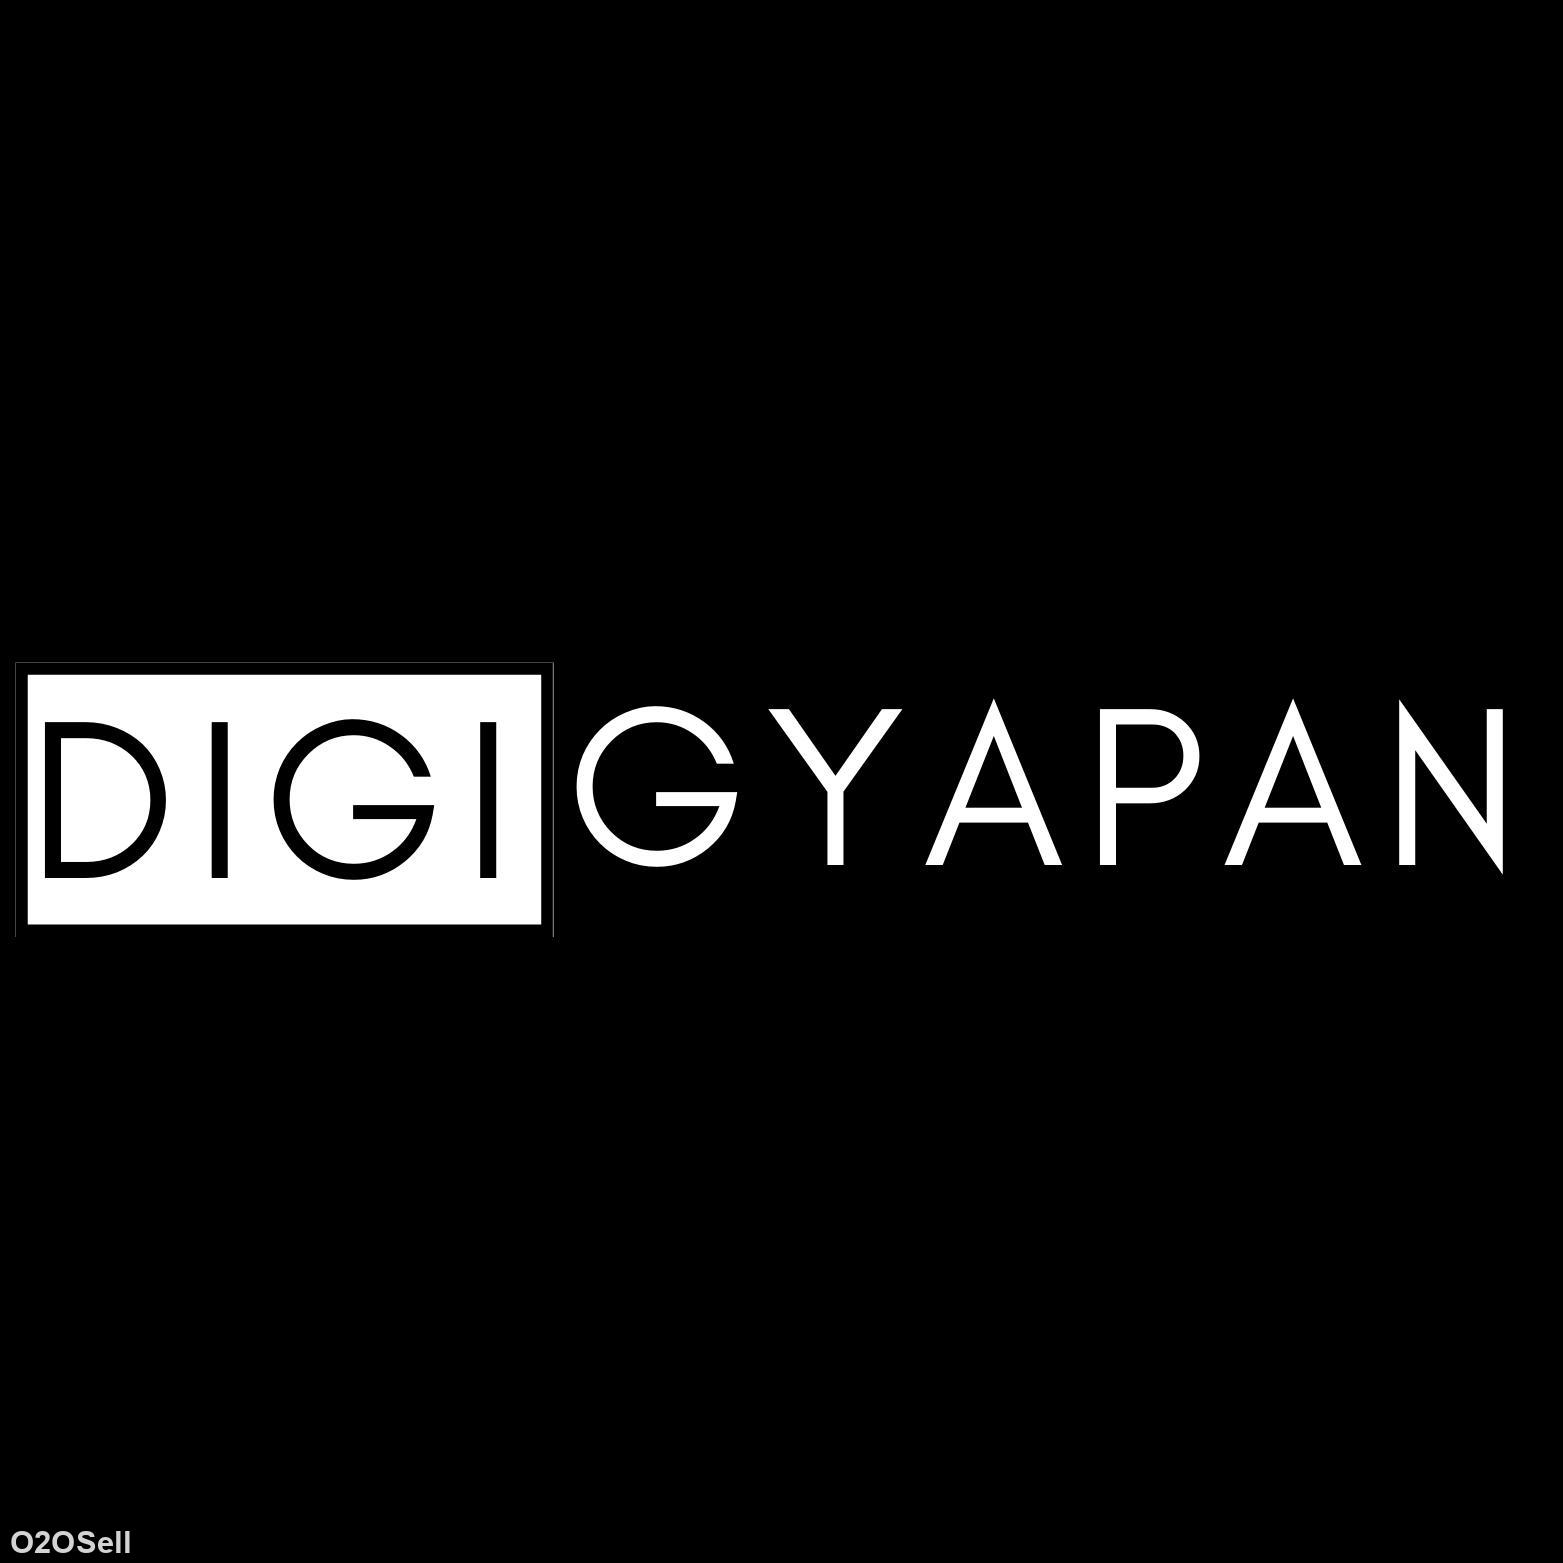 Digi Gyapan - Profile Image